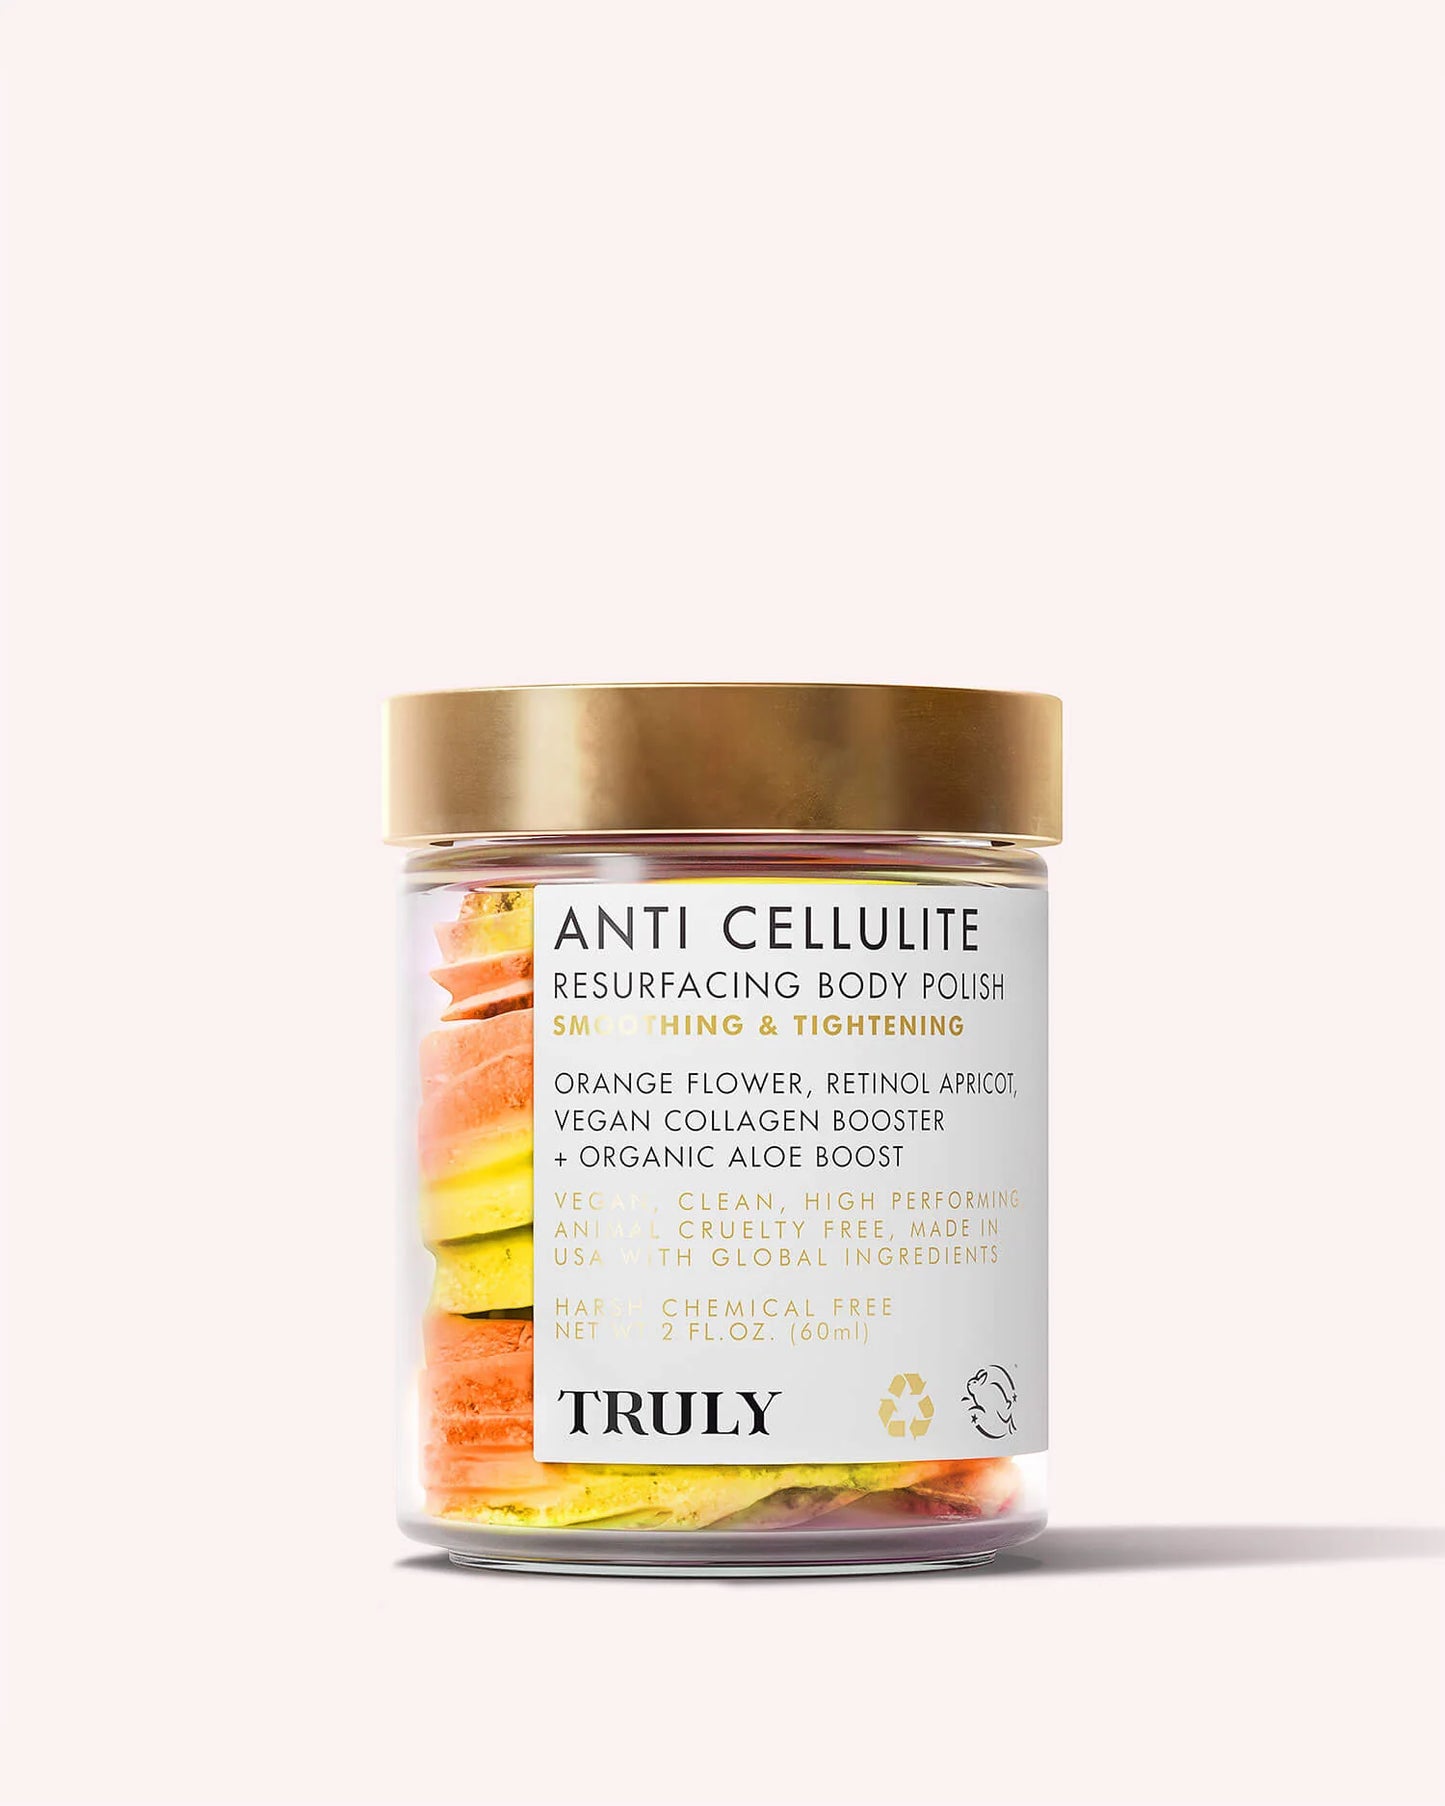 Anti cellulite resurfacing body polish Truly